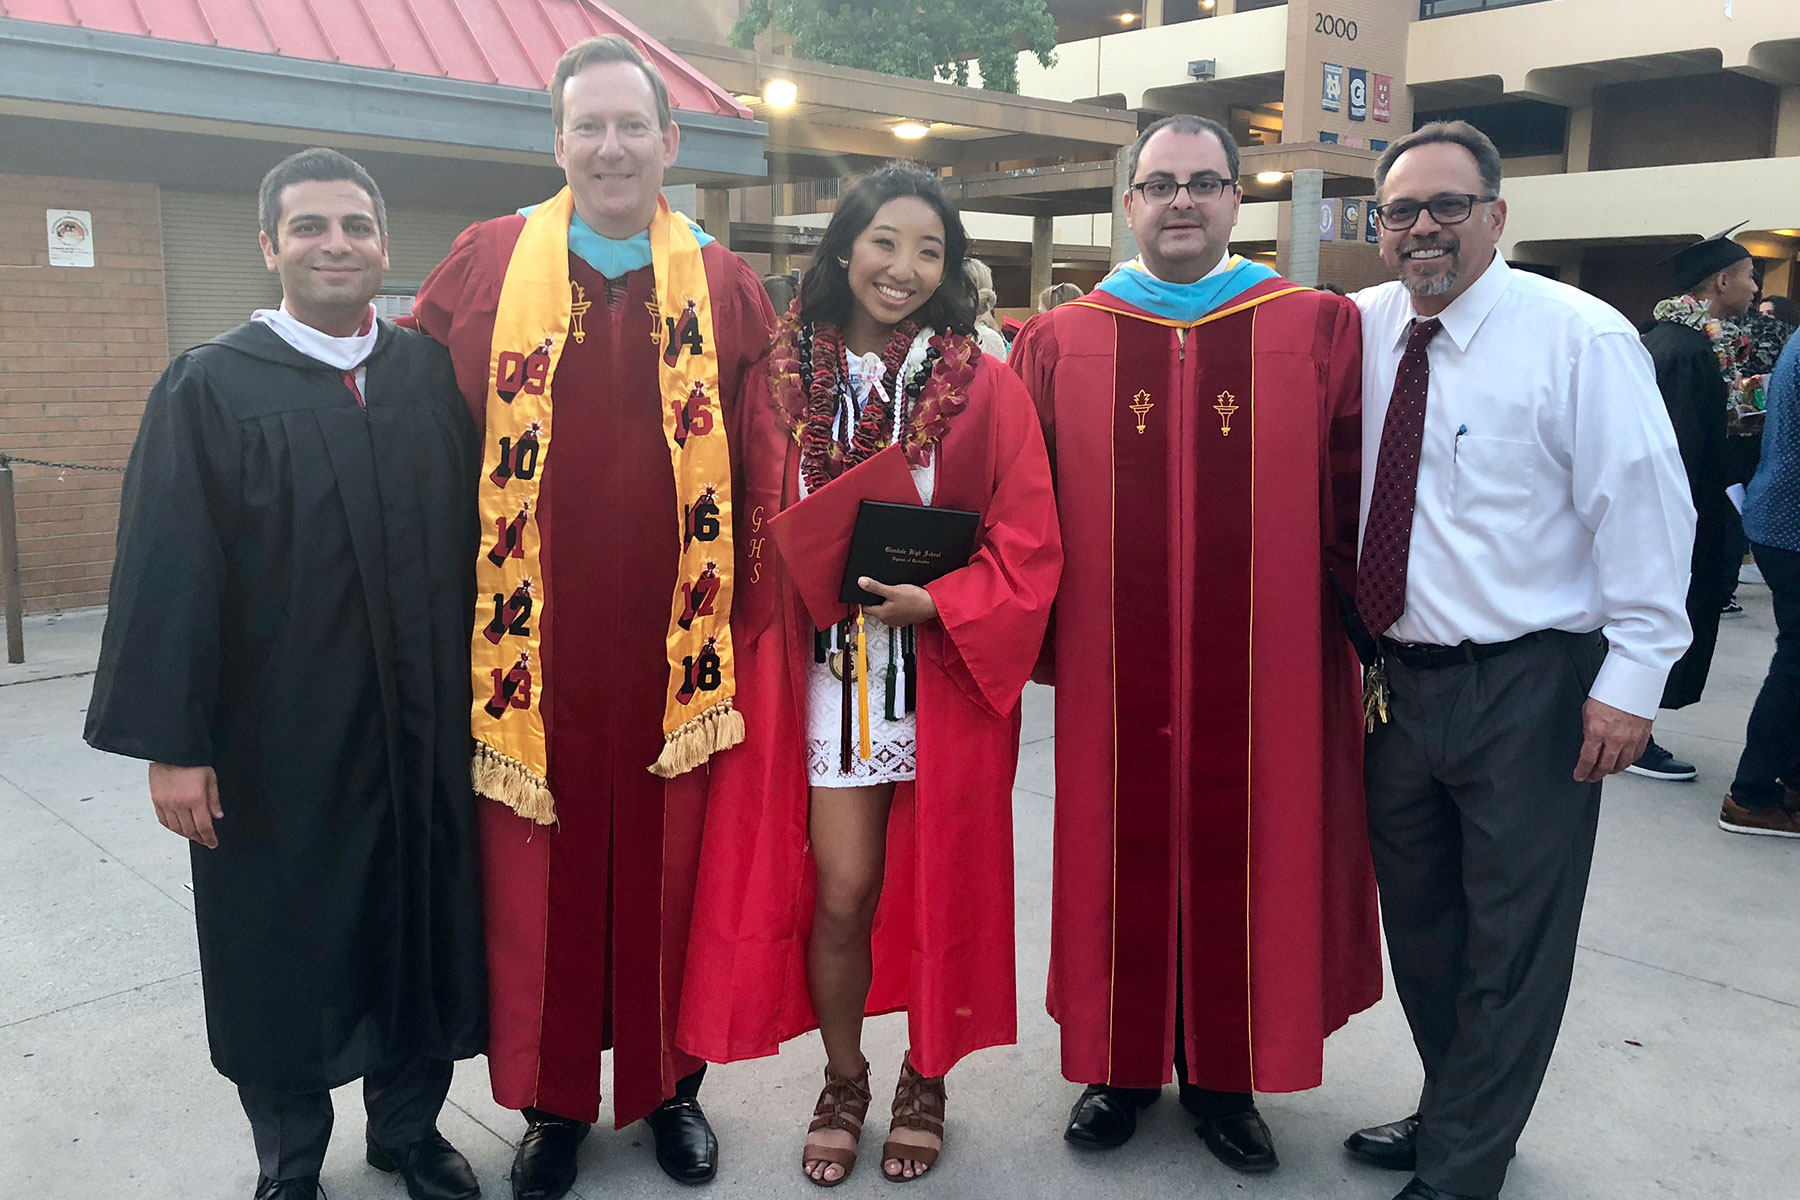 Glendale High School Graduation Ceremony June 2018